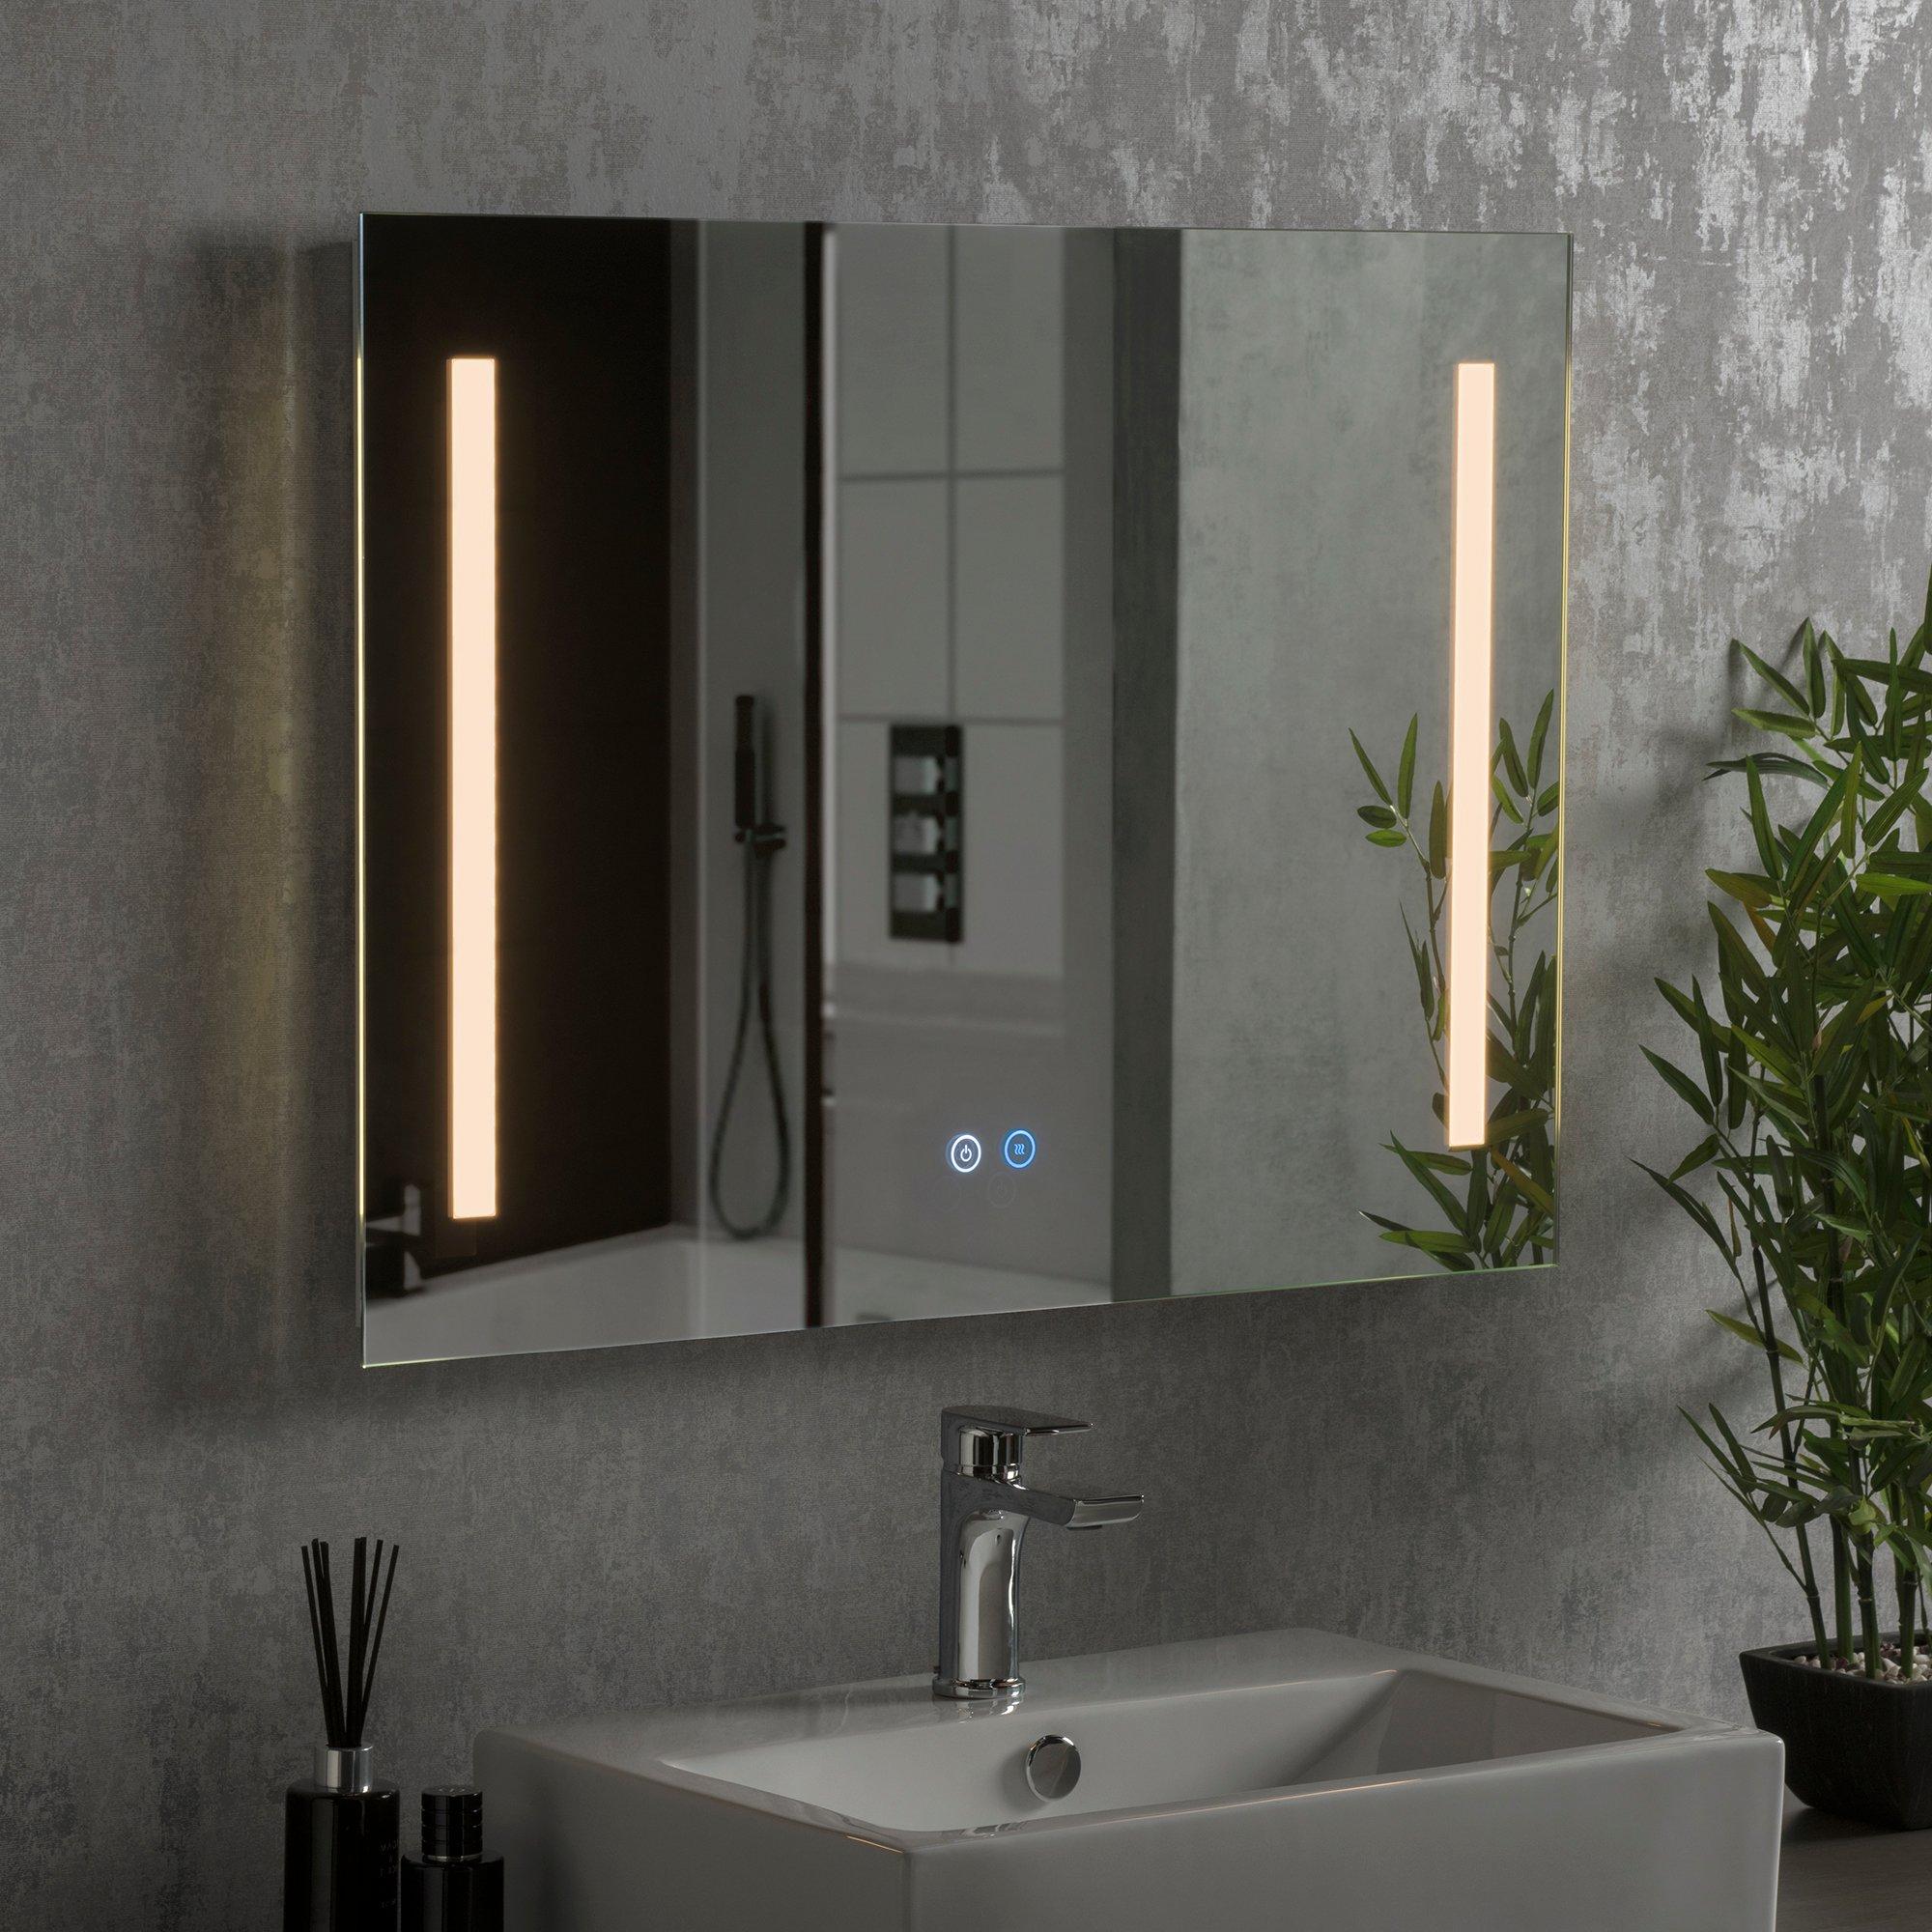 LED Landscape Bathroom Mirror 80(w) x 60cm(h) Dimmable with Anti-Fog